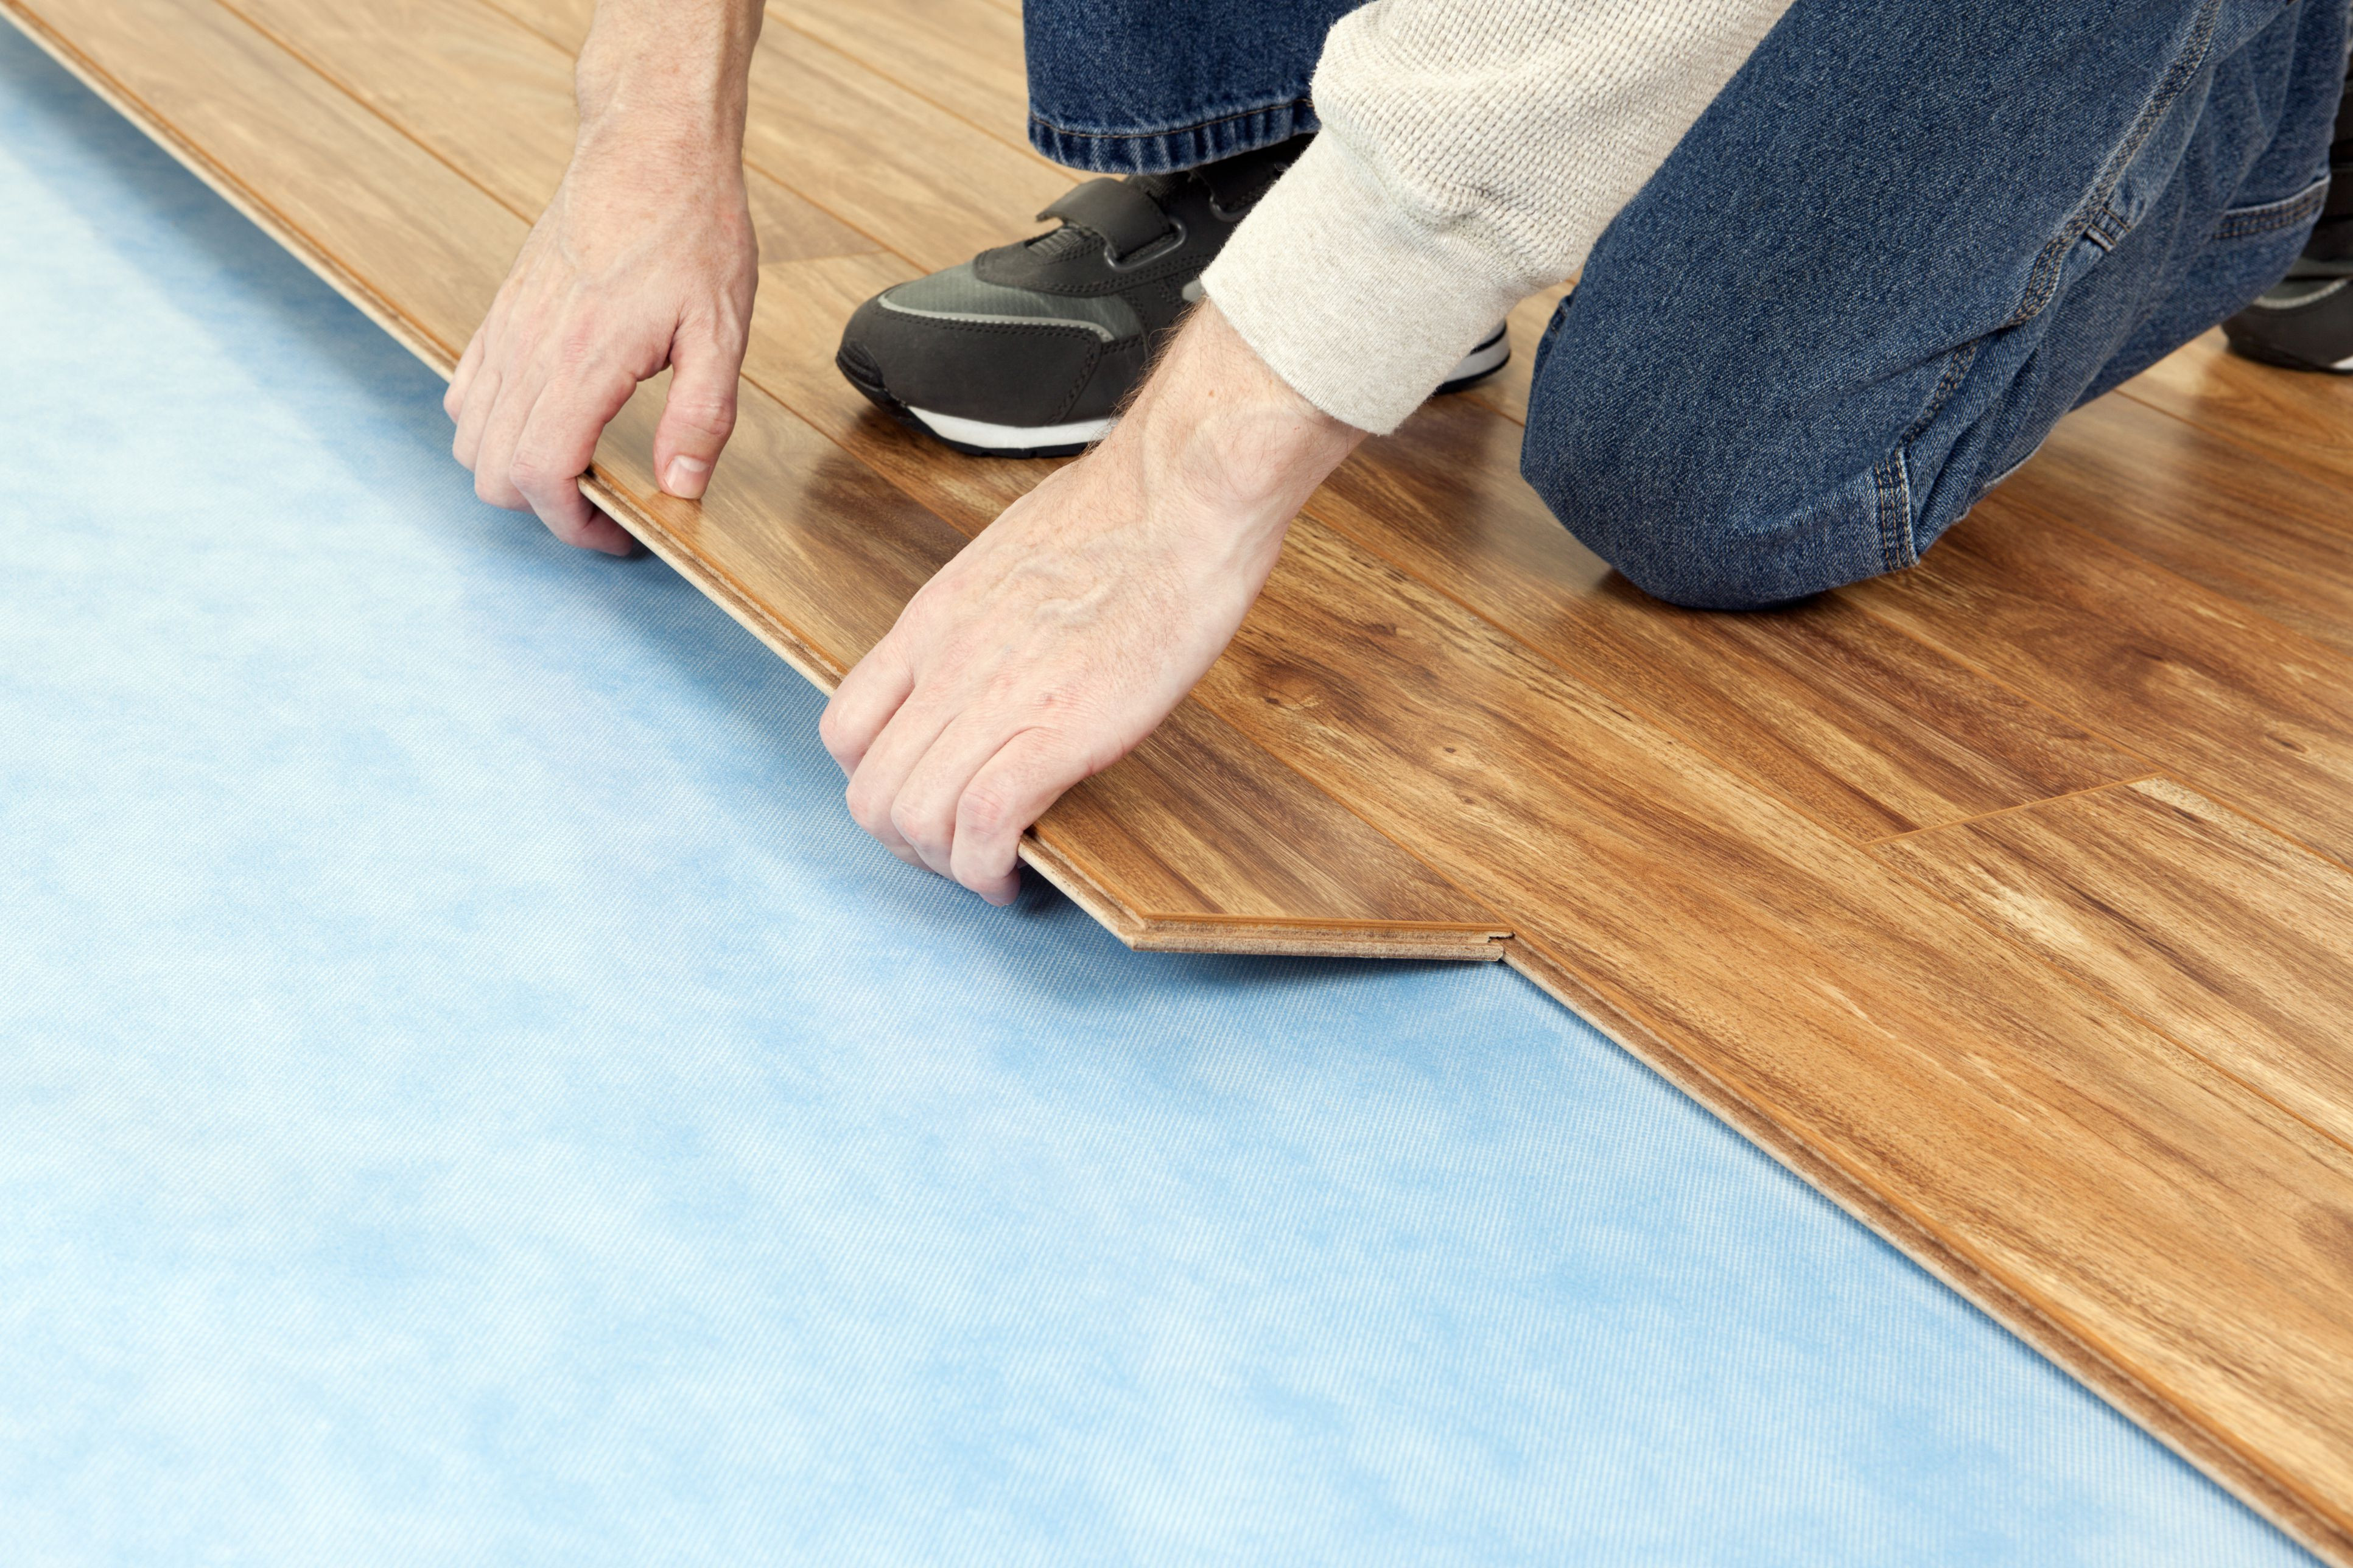 hardwood floor underlayment reviews of flooring underlayment the basics throughout new floor installation 185270632 582b722c3df78c6f6af0a8ab